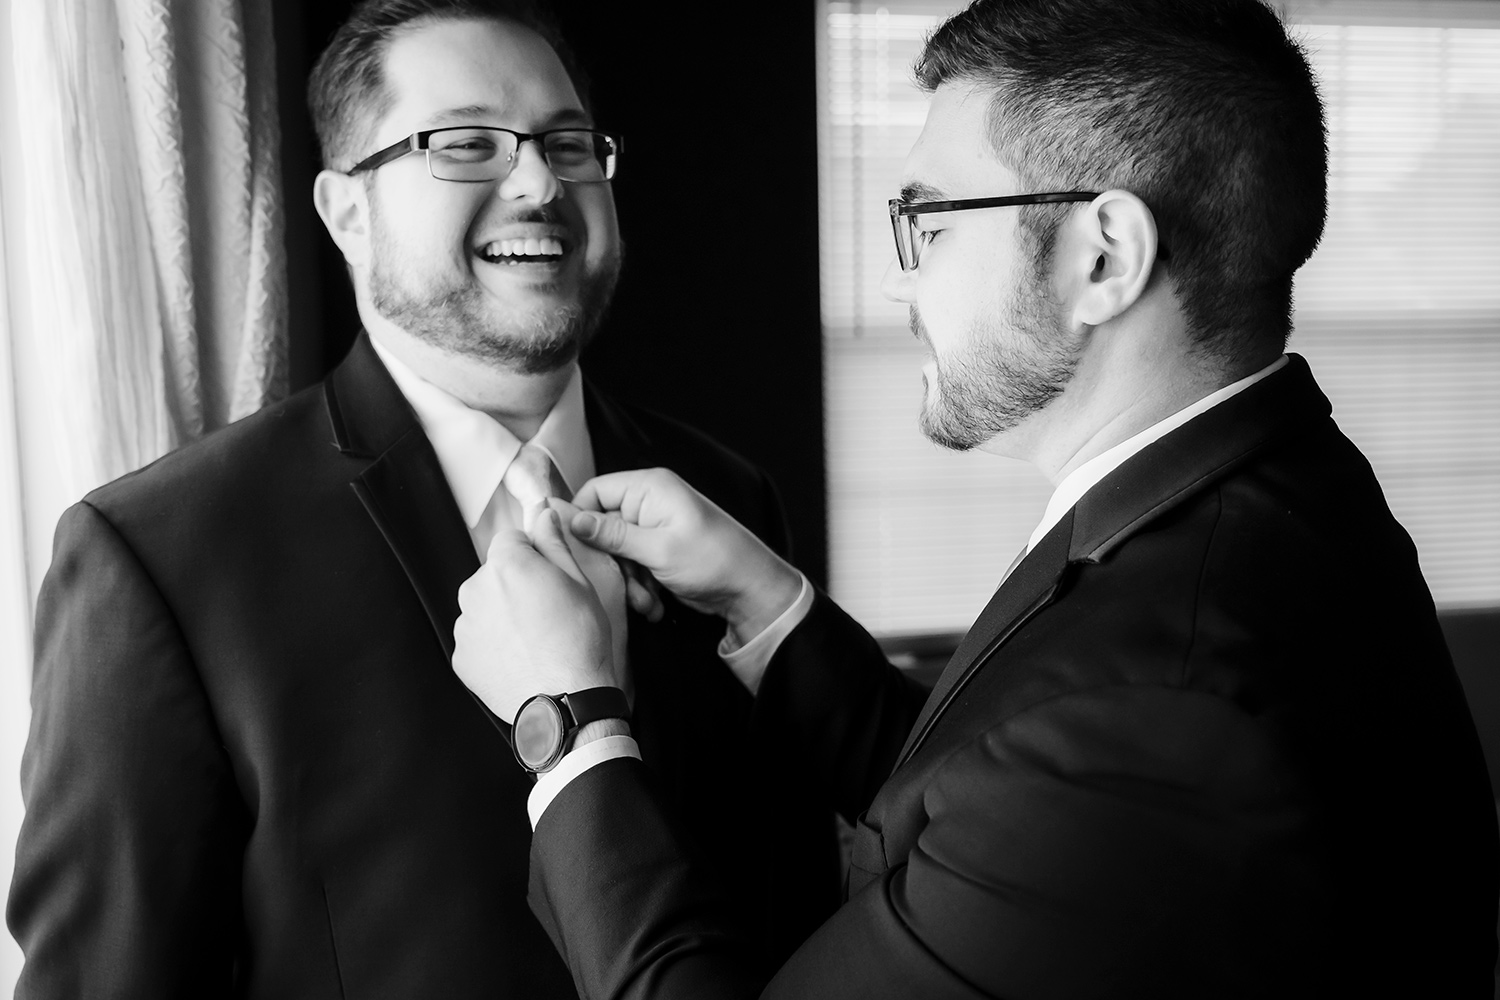 Best man assists groom with tie